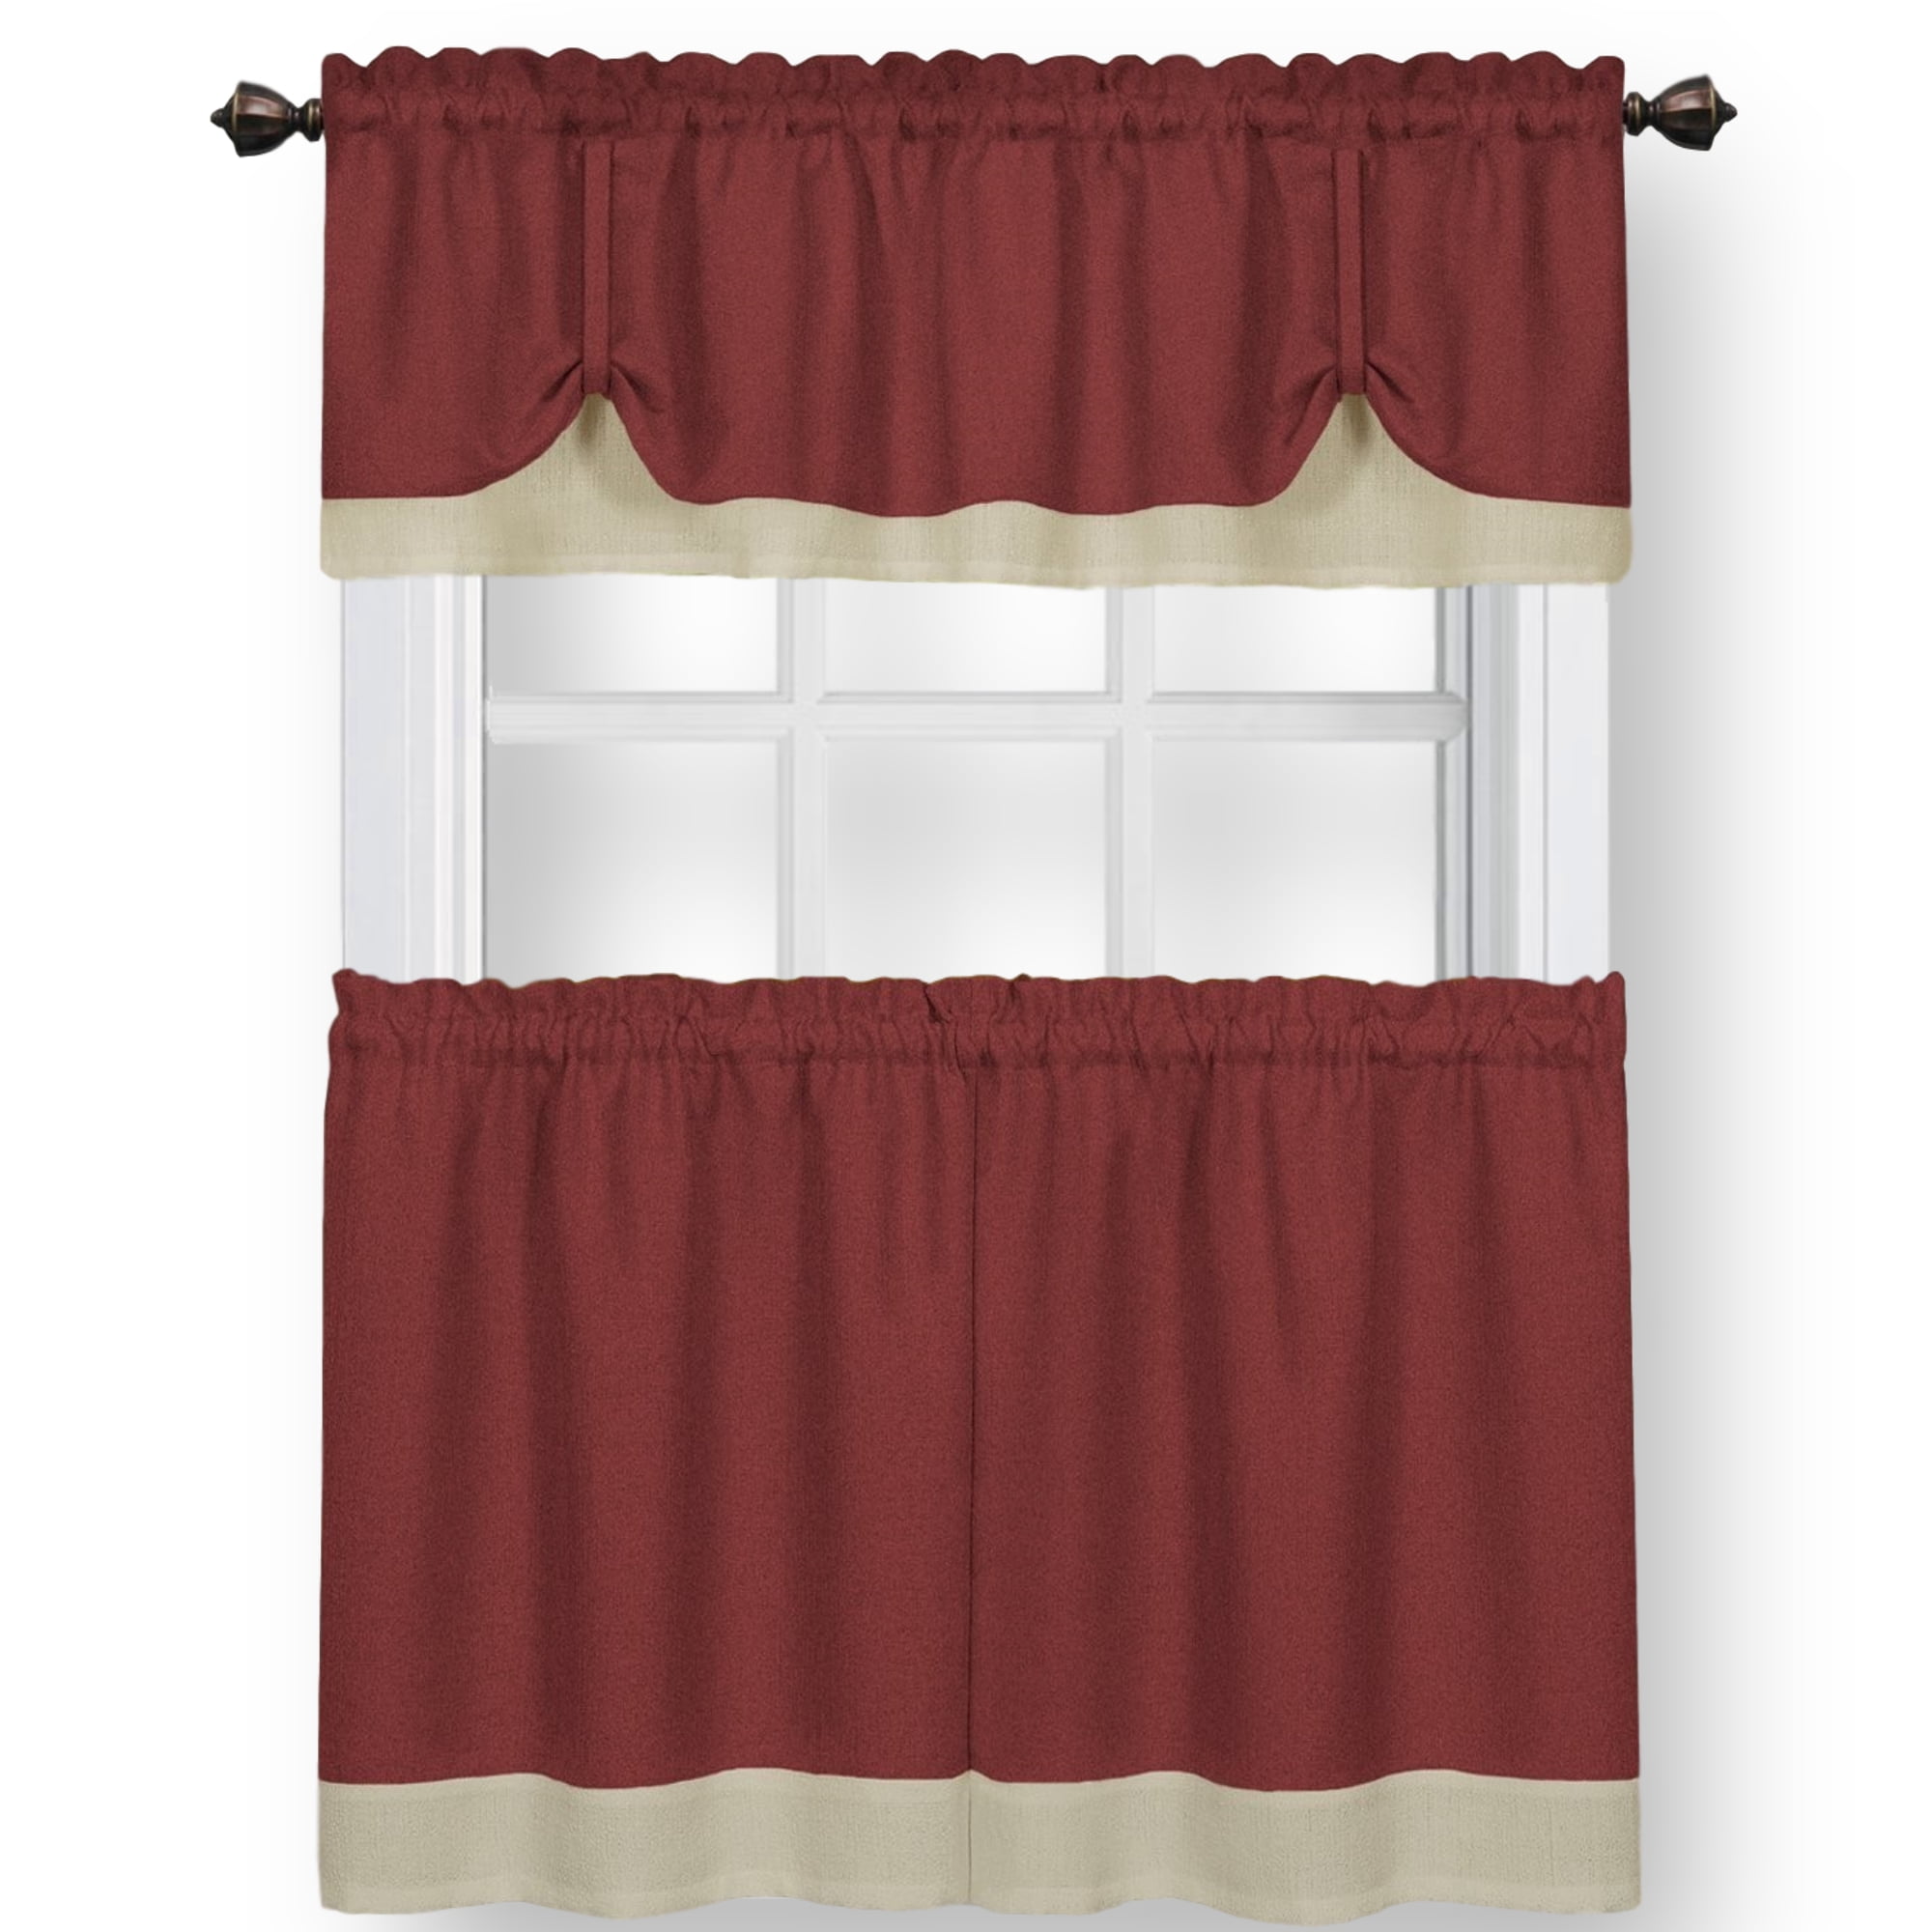 1 Valance Double-Layer Burgundy 3-Pc Kitchen Window Curtain Set 2 Tiers 